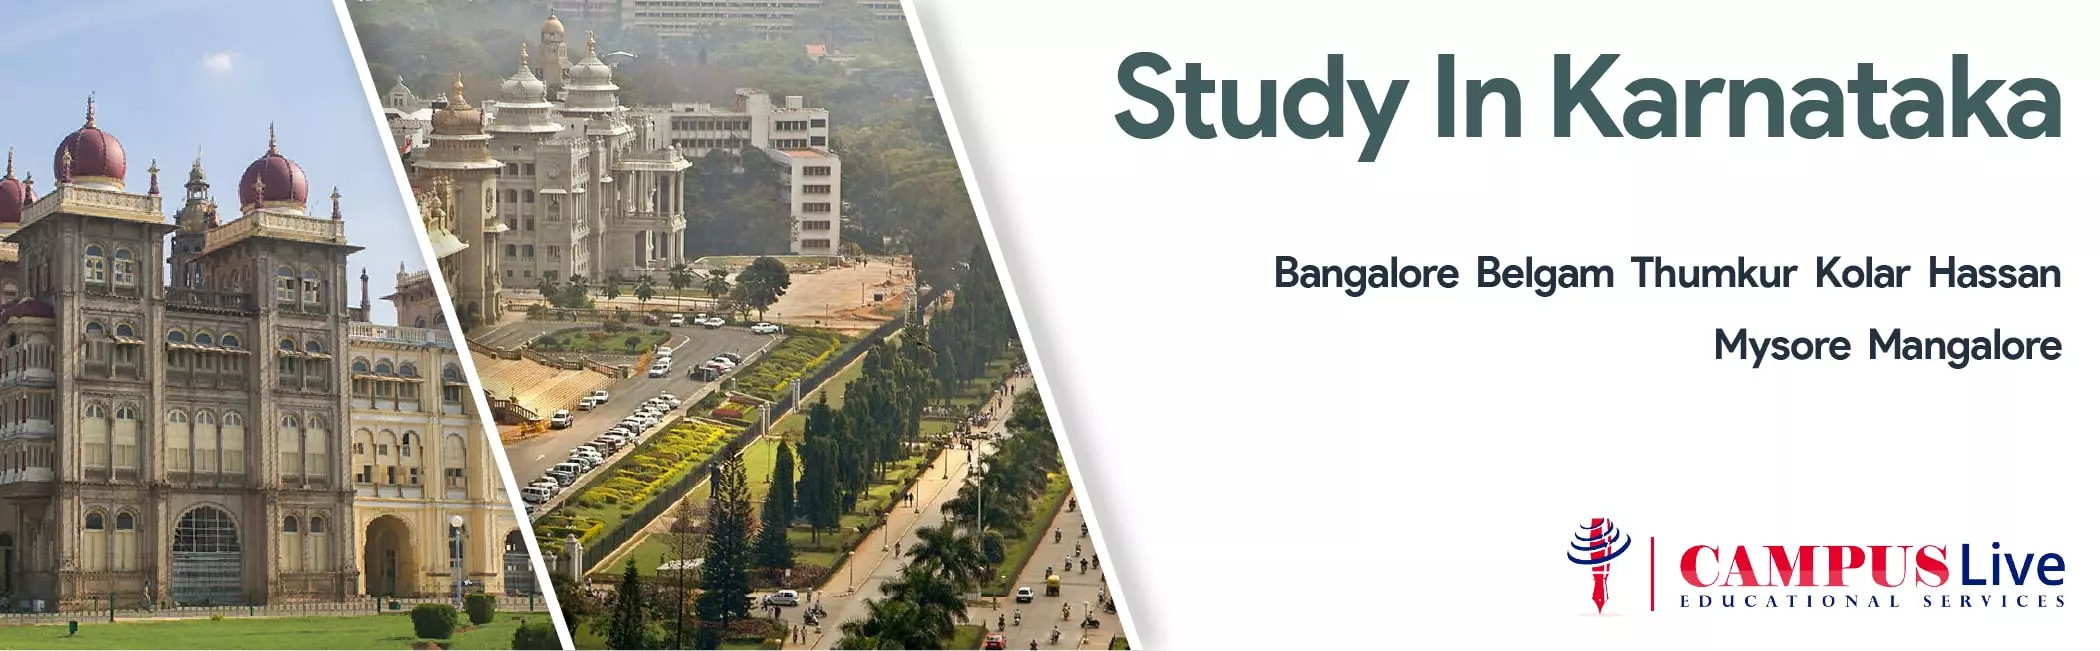 Study in Karnataka